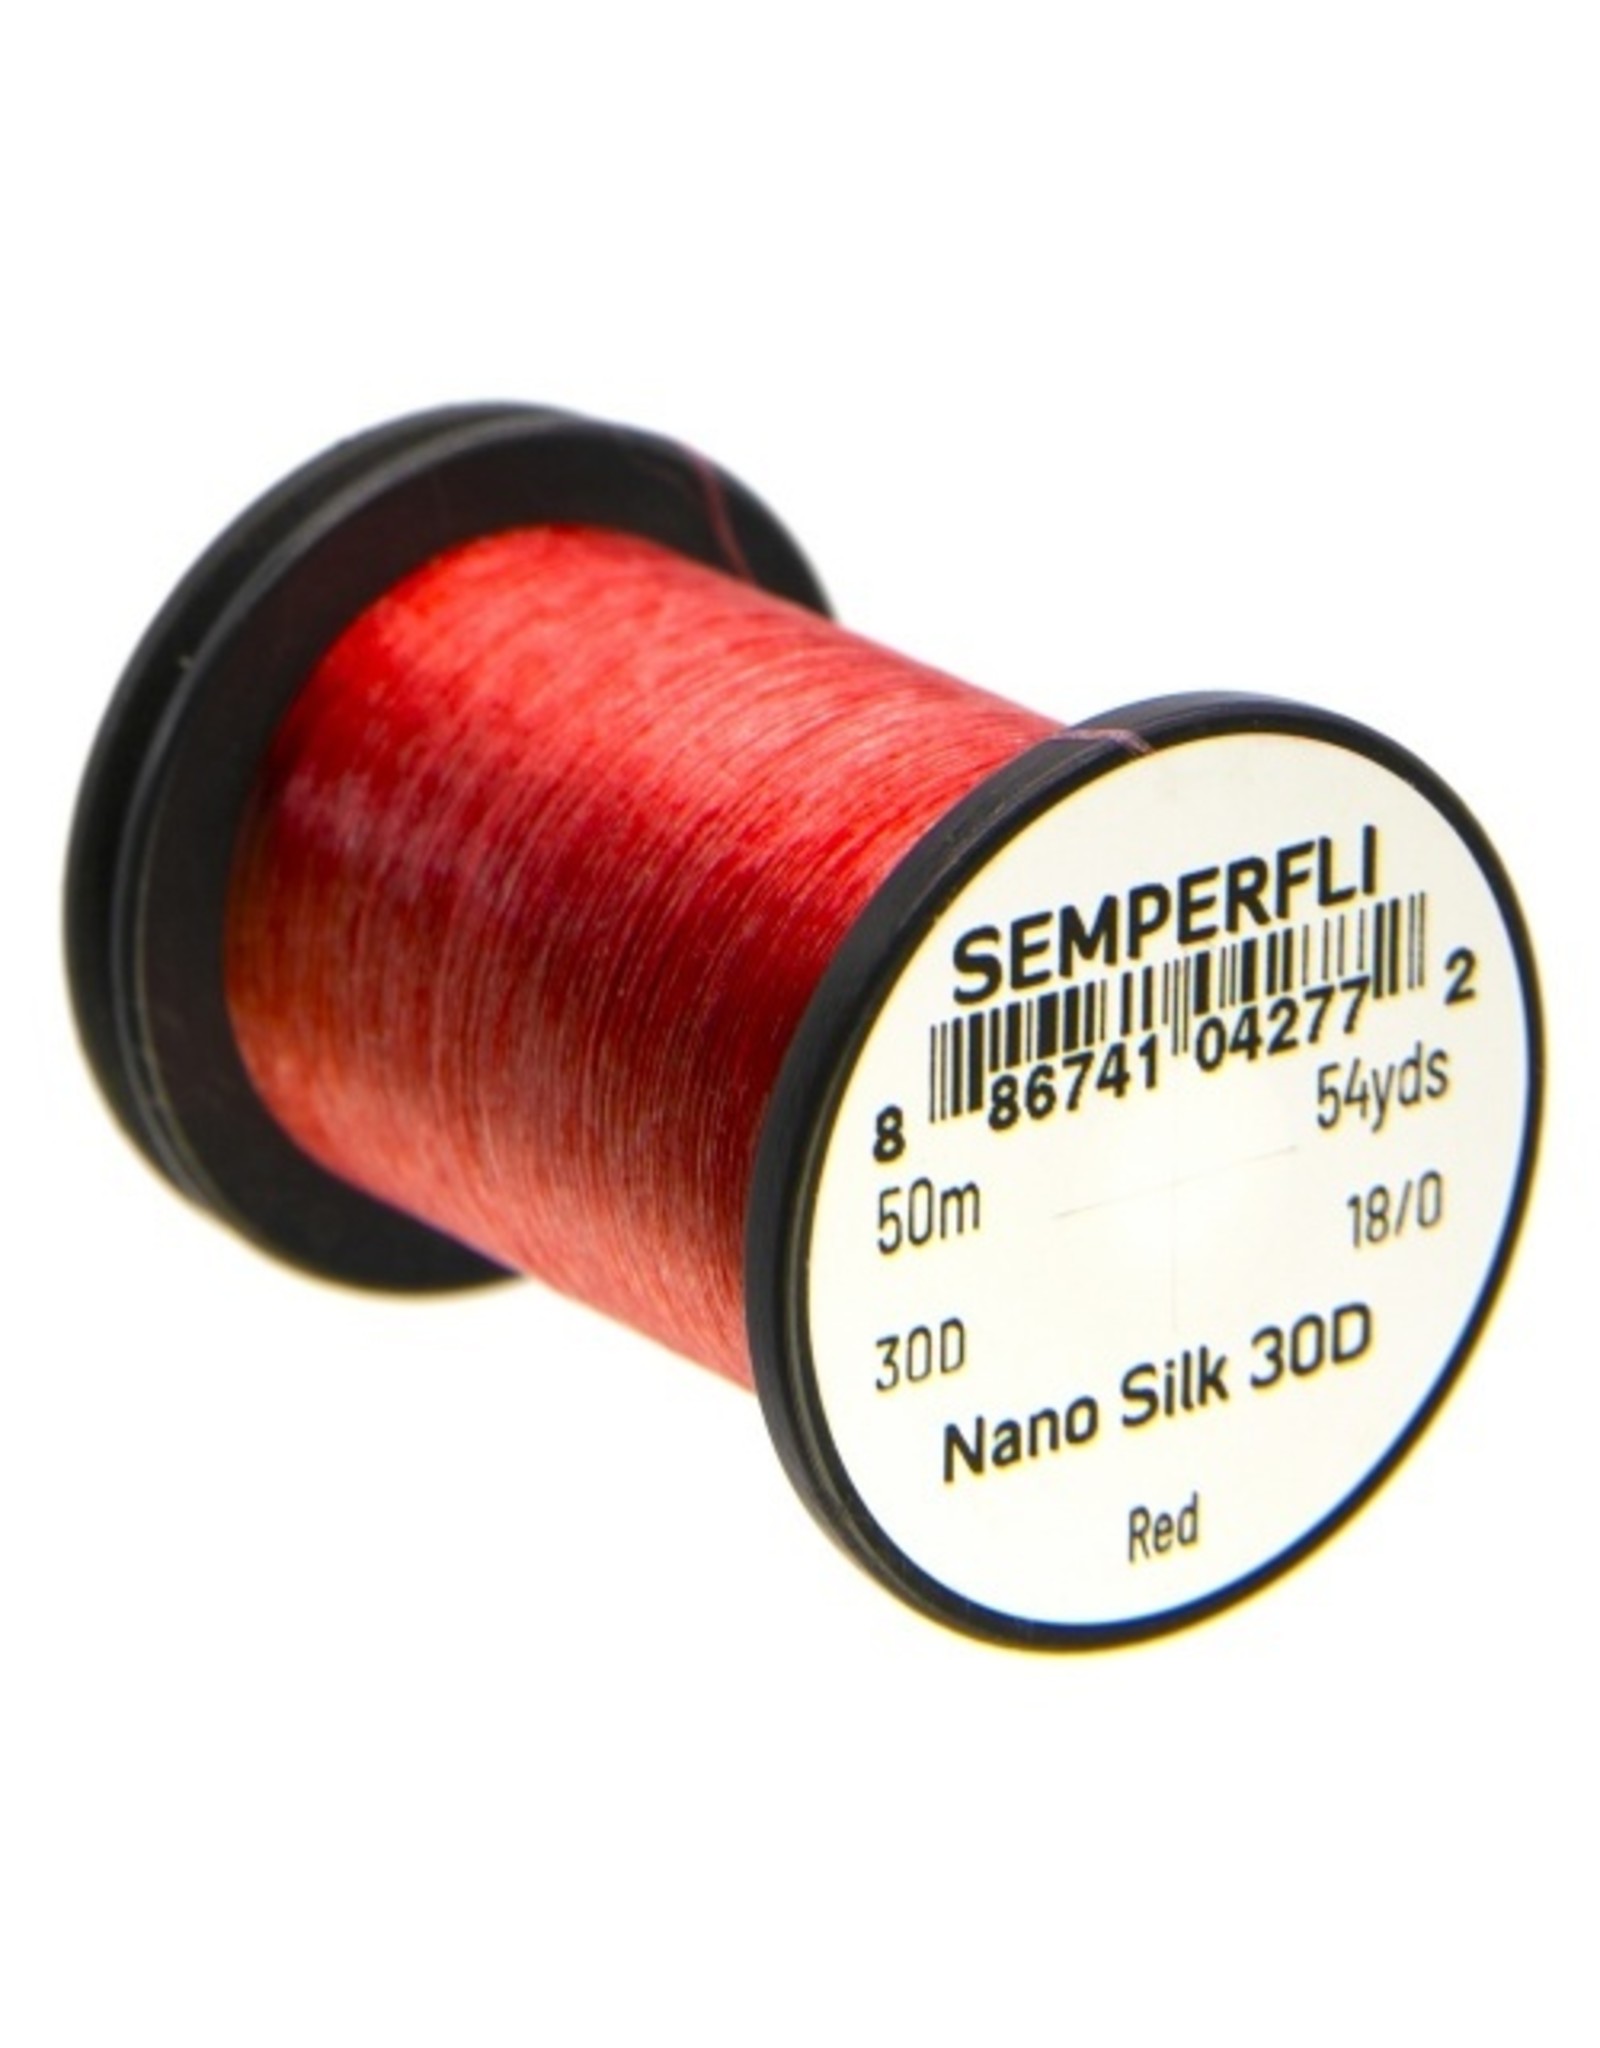 Semperfli Semperfli - Nano Silk